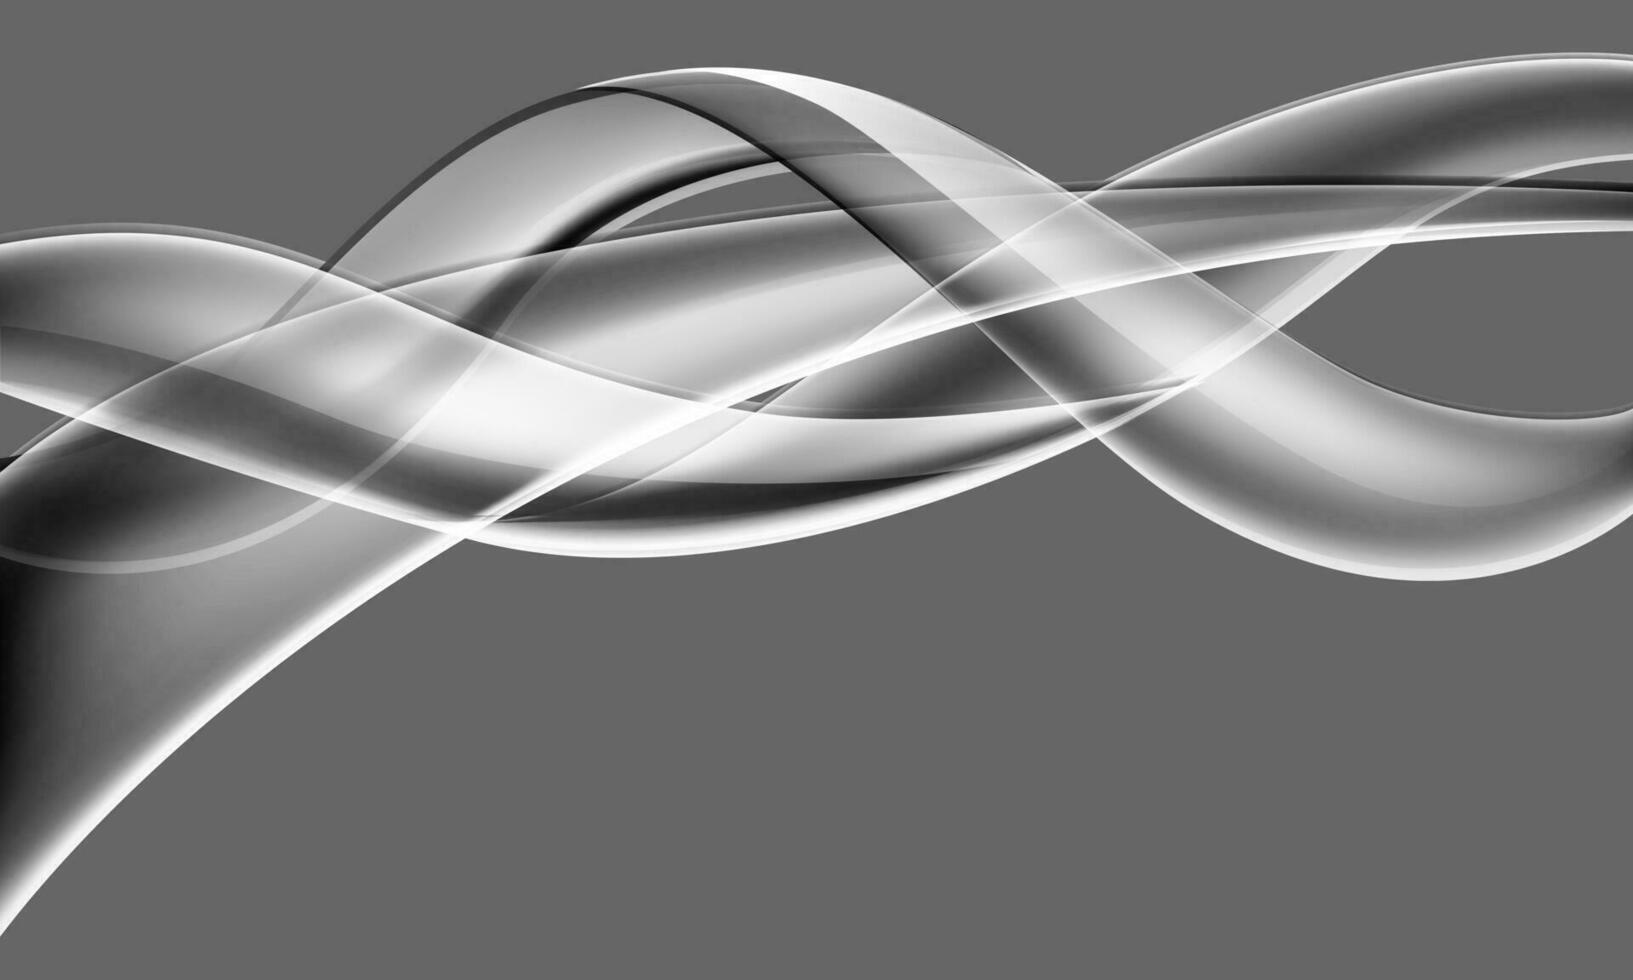 abstrakt glas glansig linje spiral kurva Vinka rörelse på grå design modern lyx trogen teknologi kreativ bakgrund vektor